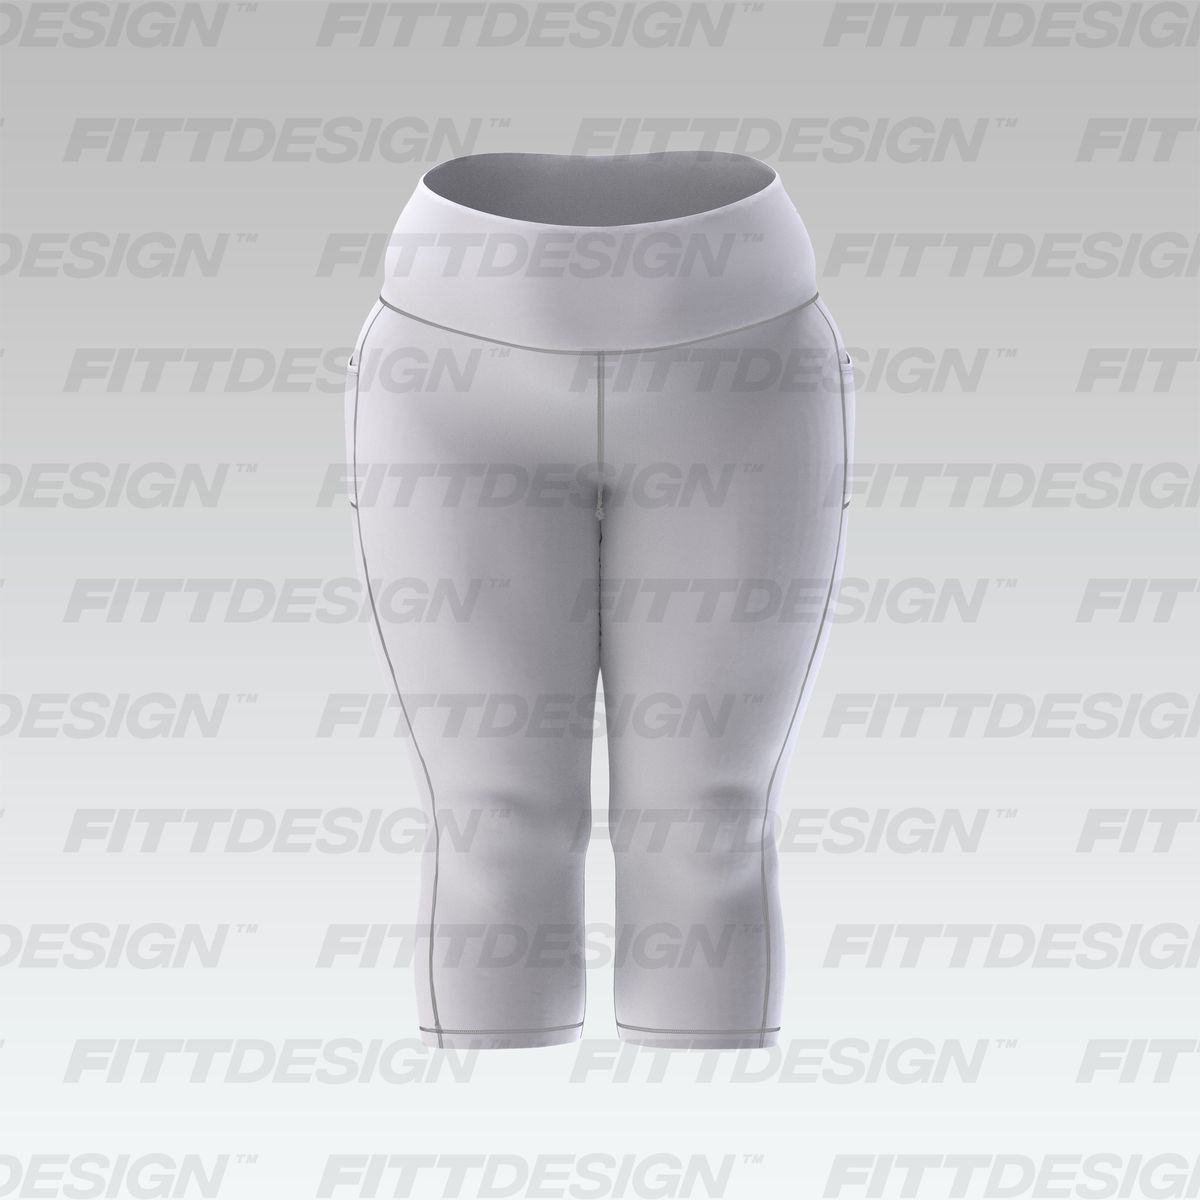 https://www.fittdesign.com/uploads/product/ladies-plus-size-23-inch-inseam-leggings-smart-mockup/7f8cc725-16f3-45a5-bd29-a368b0b3faa6-mod=w=1200,h=1200.jpg